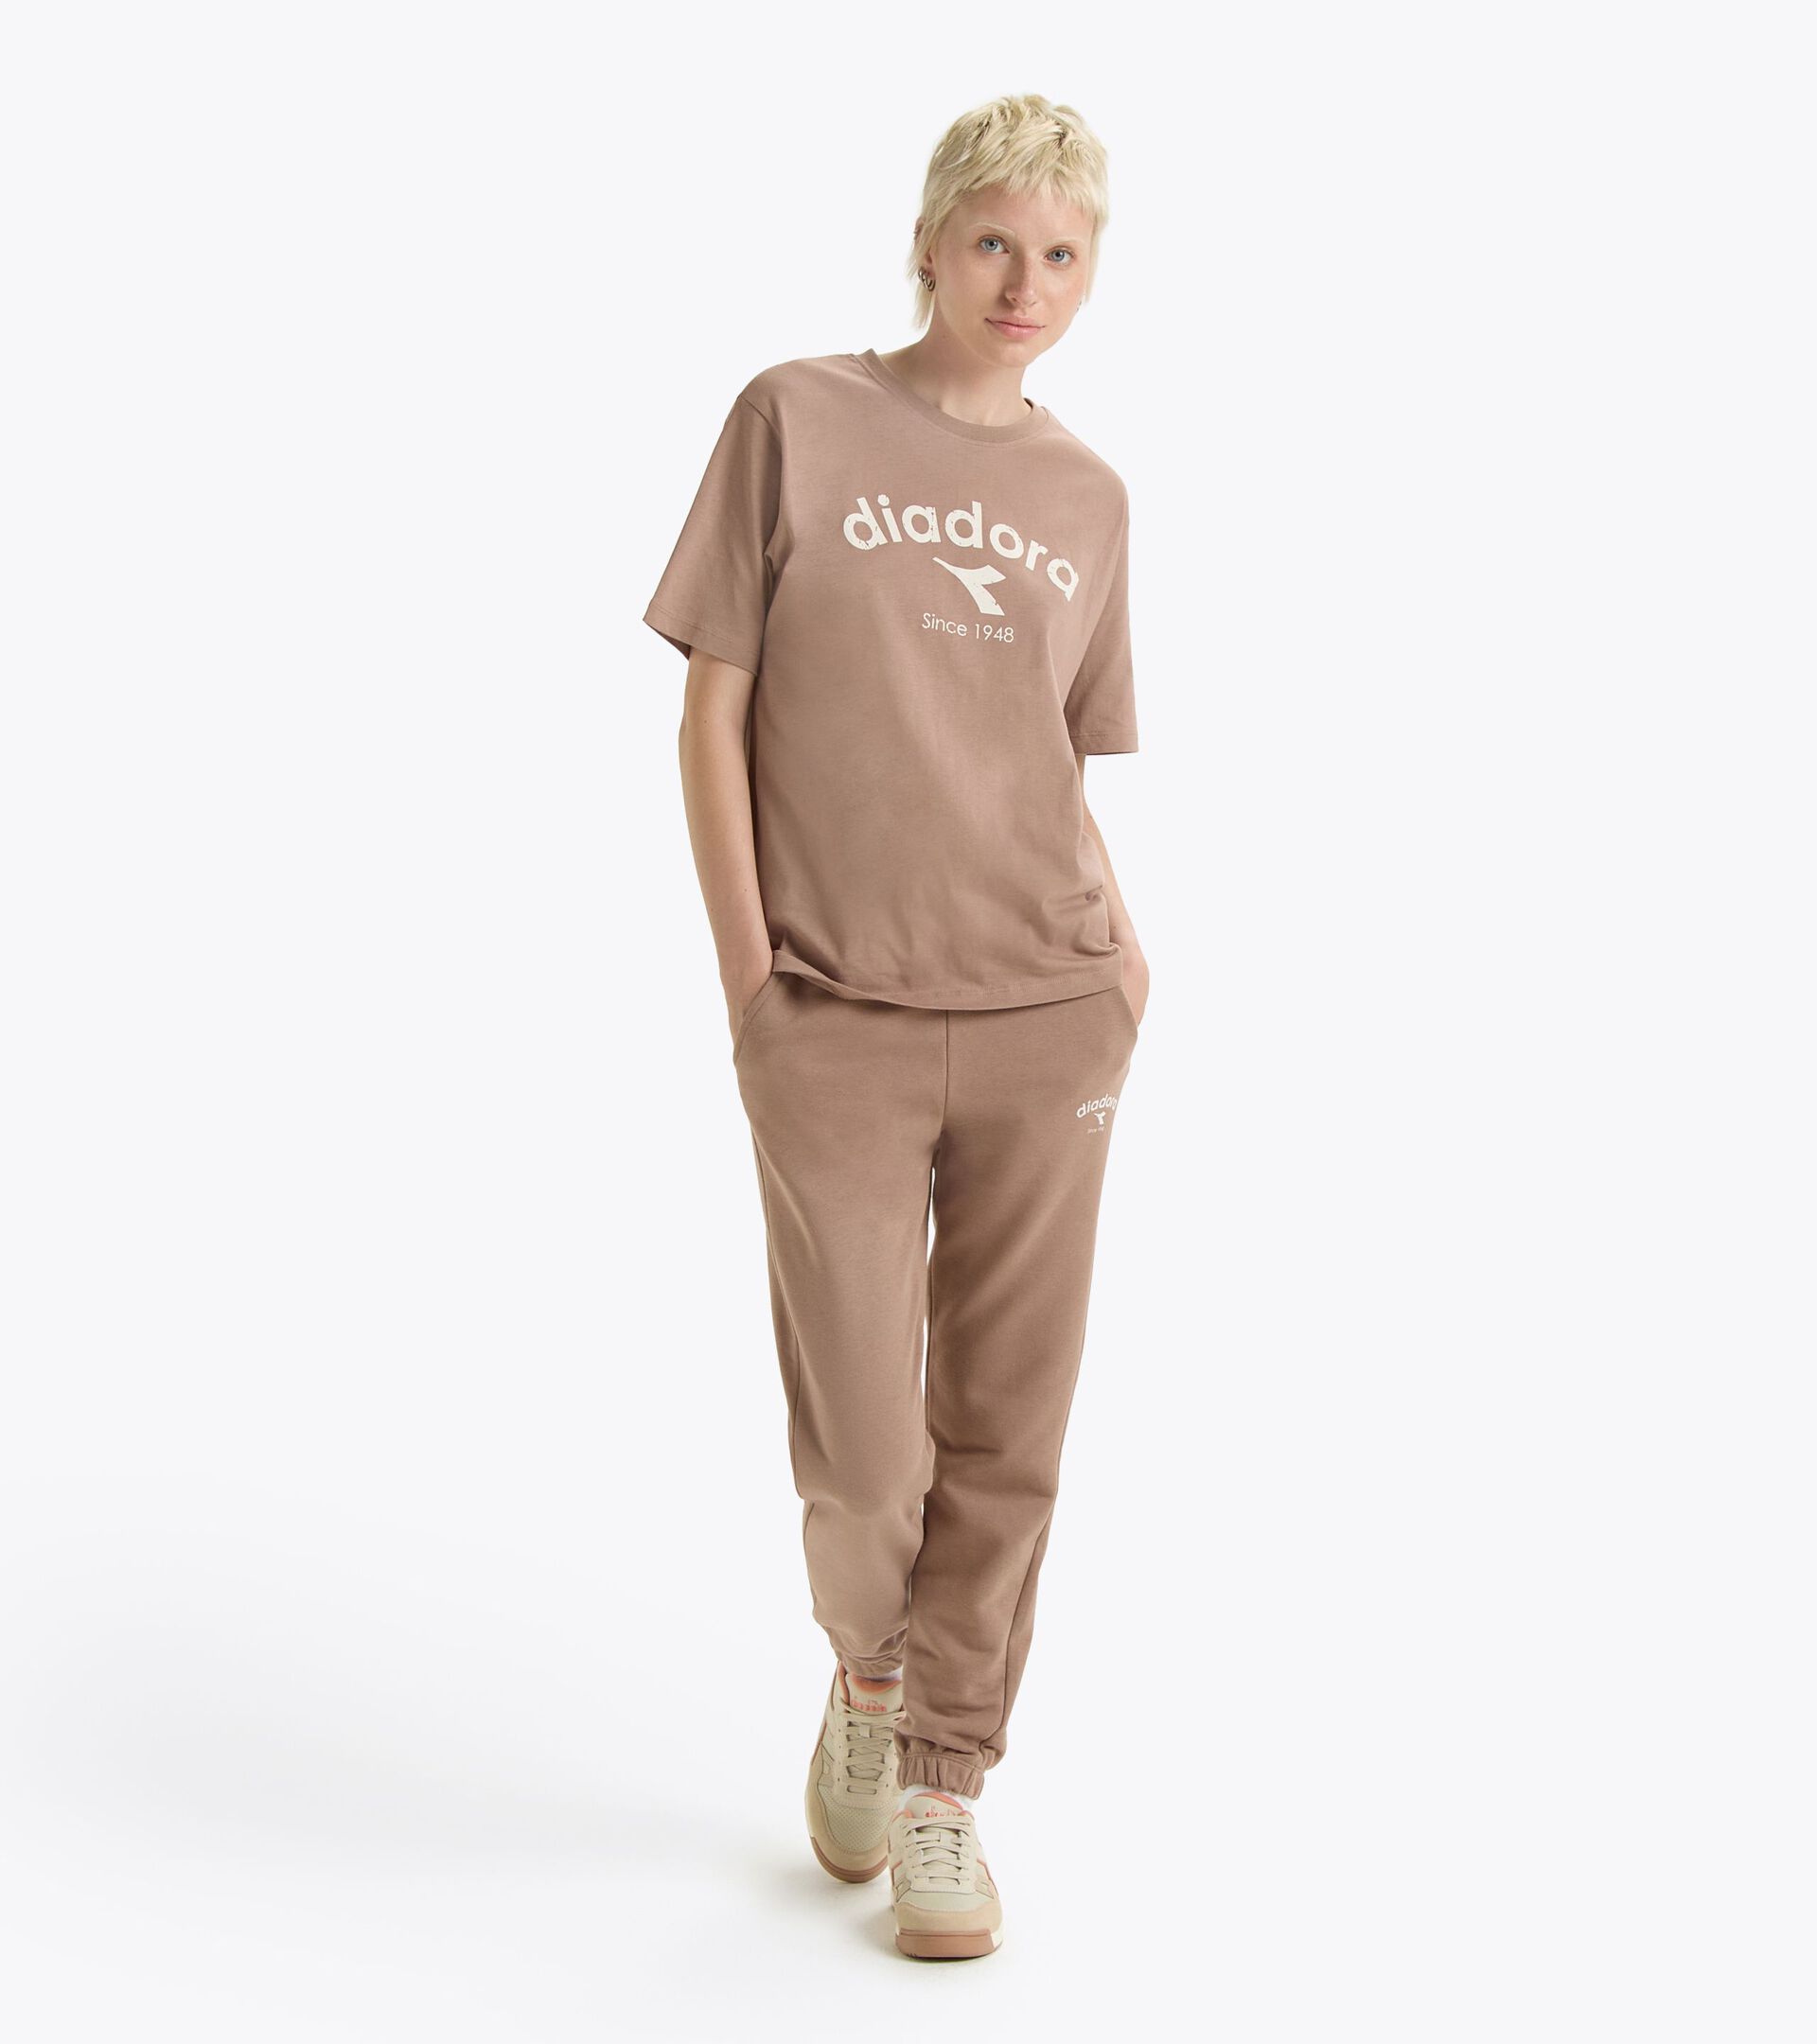 T-shirt - Gender Neutral T-SHIRT SS ATHL. LOGO MARRONE NOCCIOLA CHIARO - Diadora